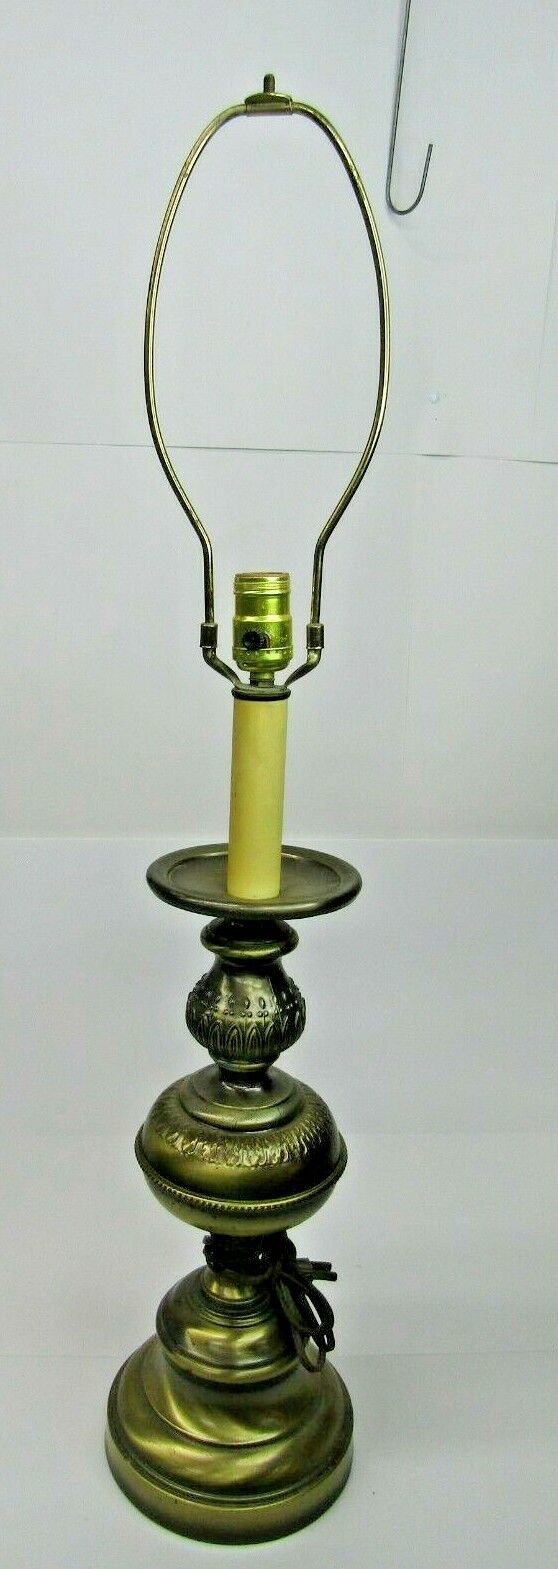 VTG Brass Table Lamp No Shade 24